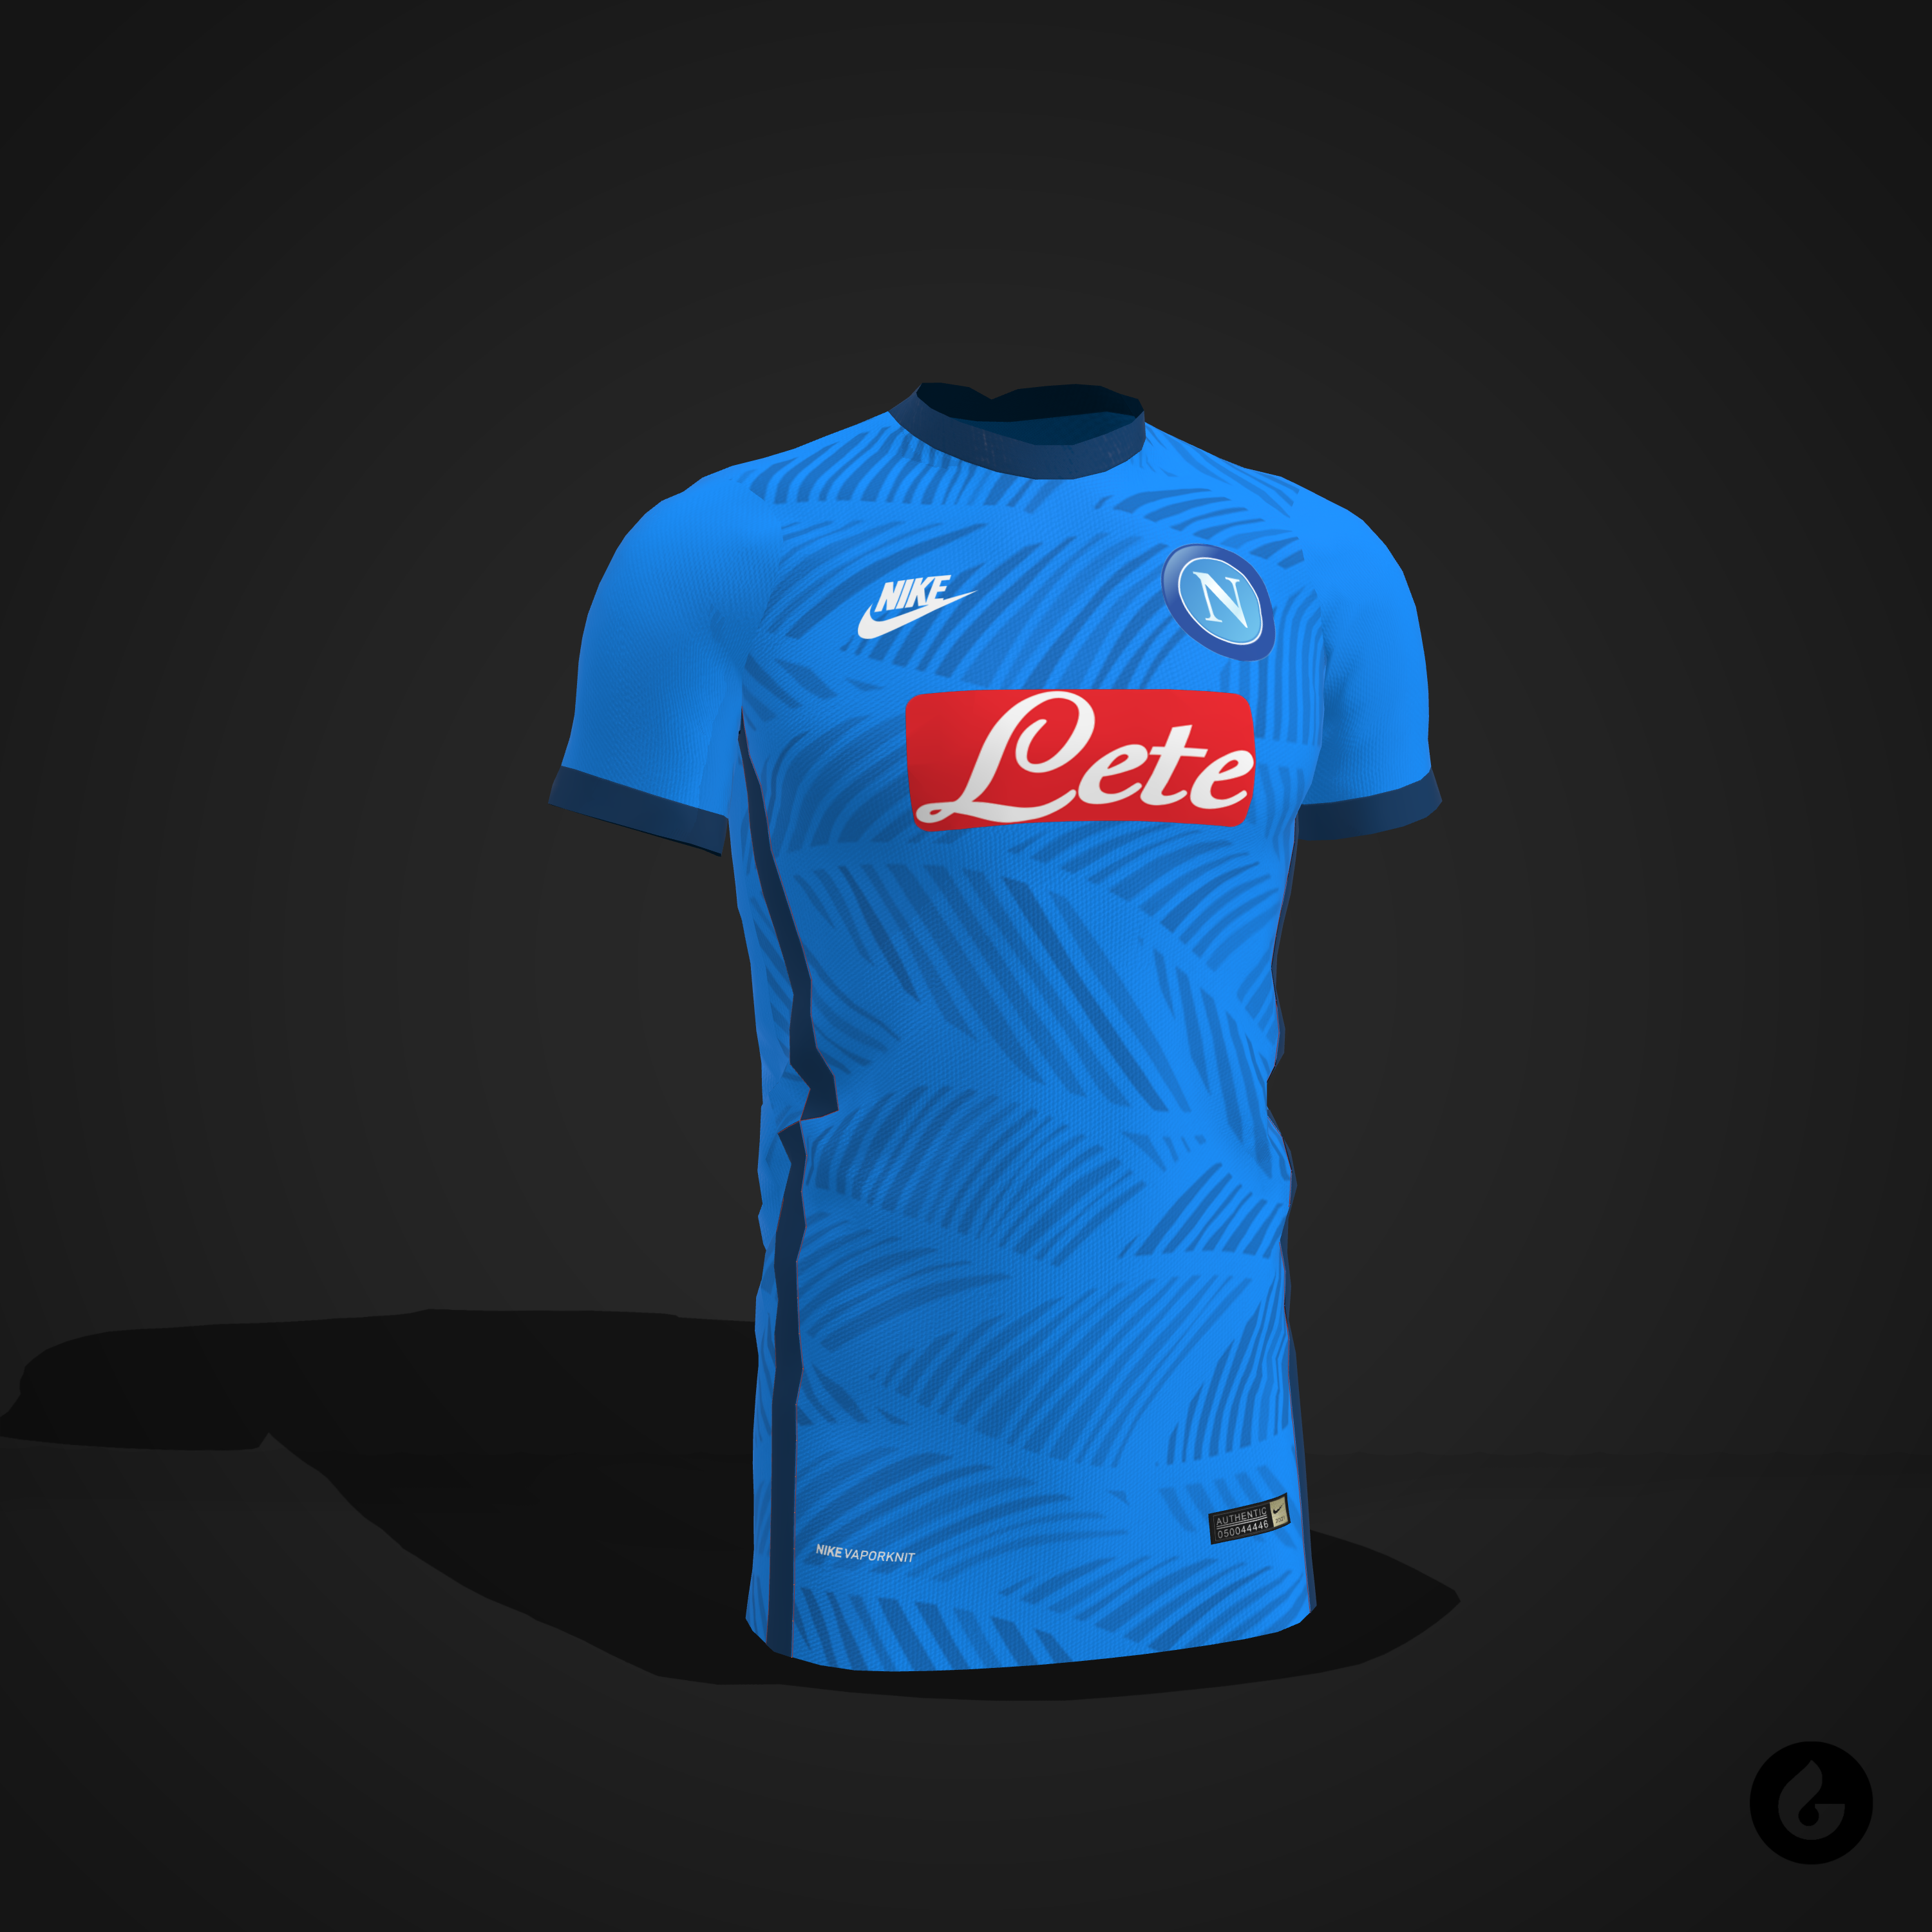 Napoli x Nike Concept Kit